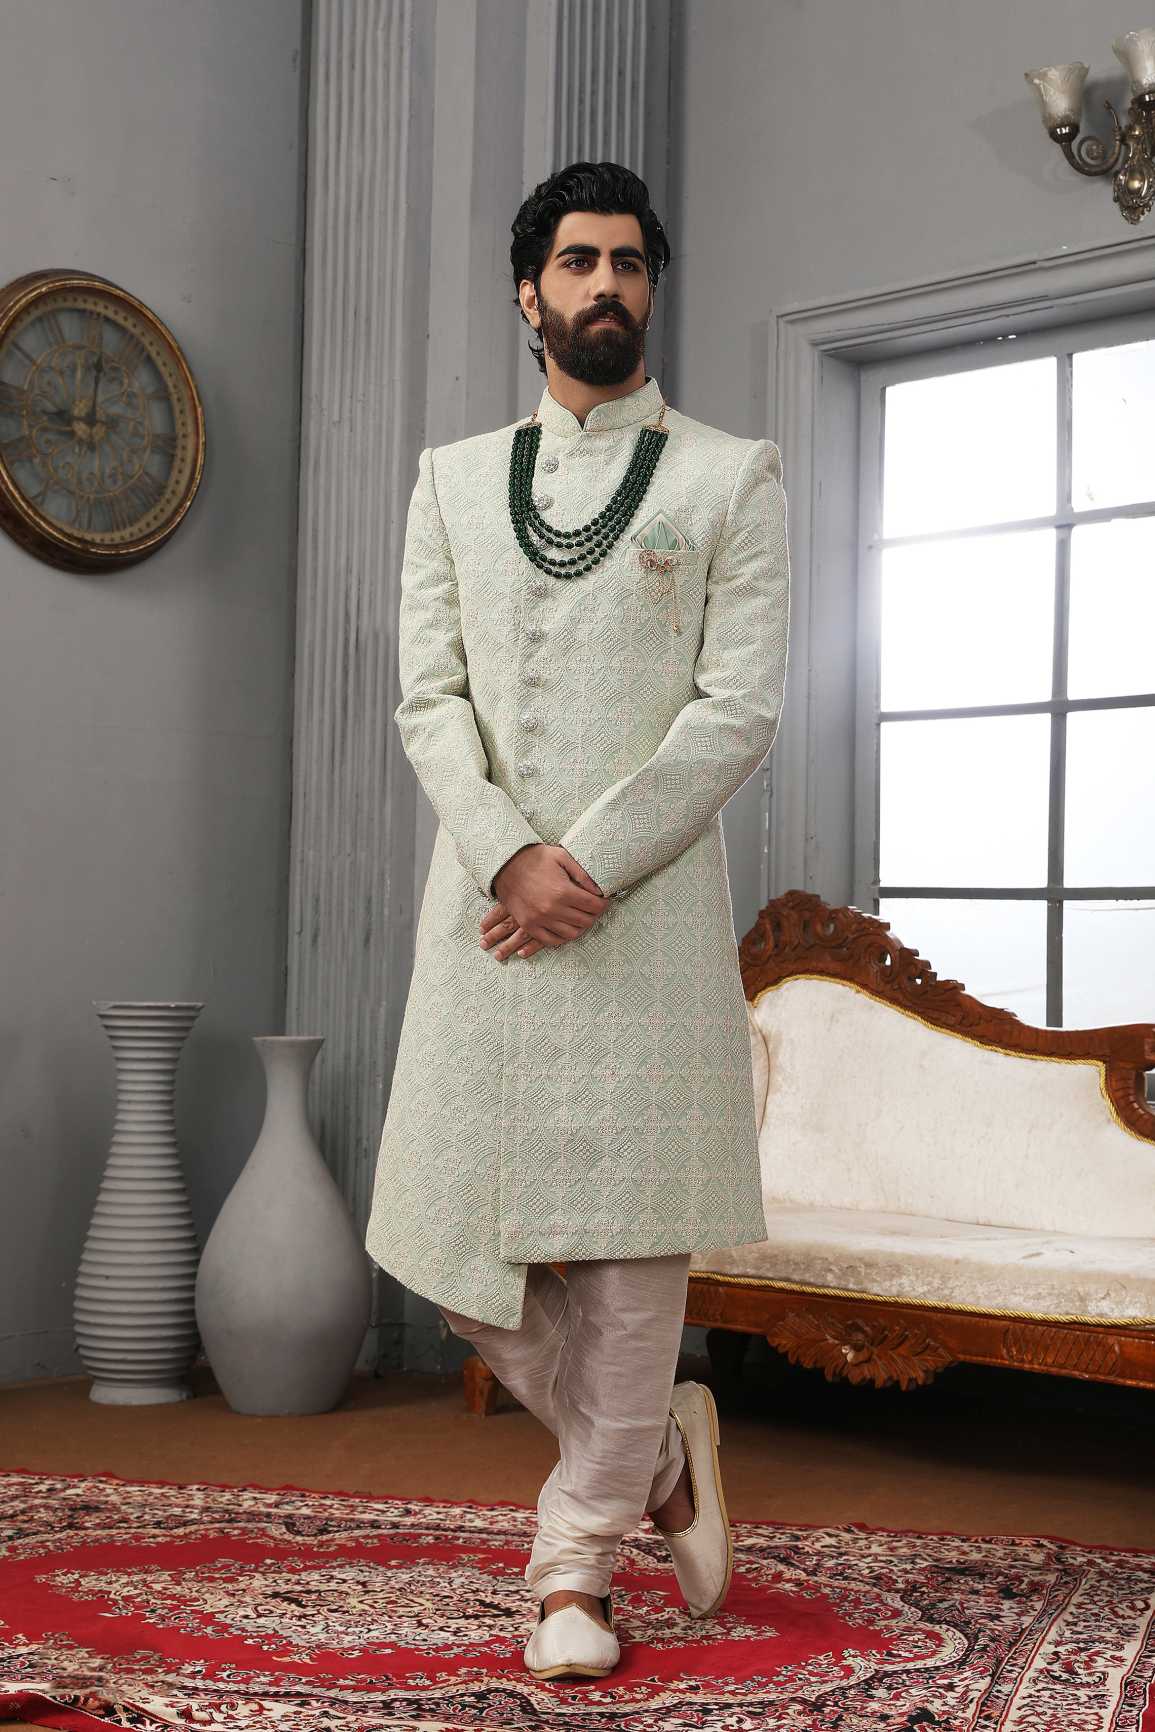 Buy Off-White Jacquard Sherwani Suit Online in Australia @Manyavar -  Sherwani for Men